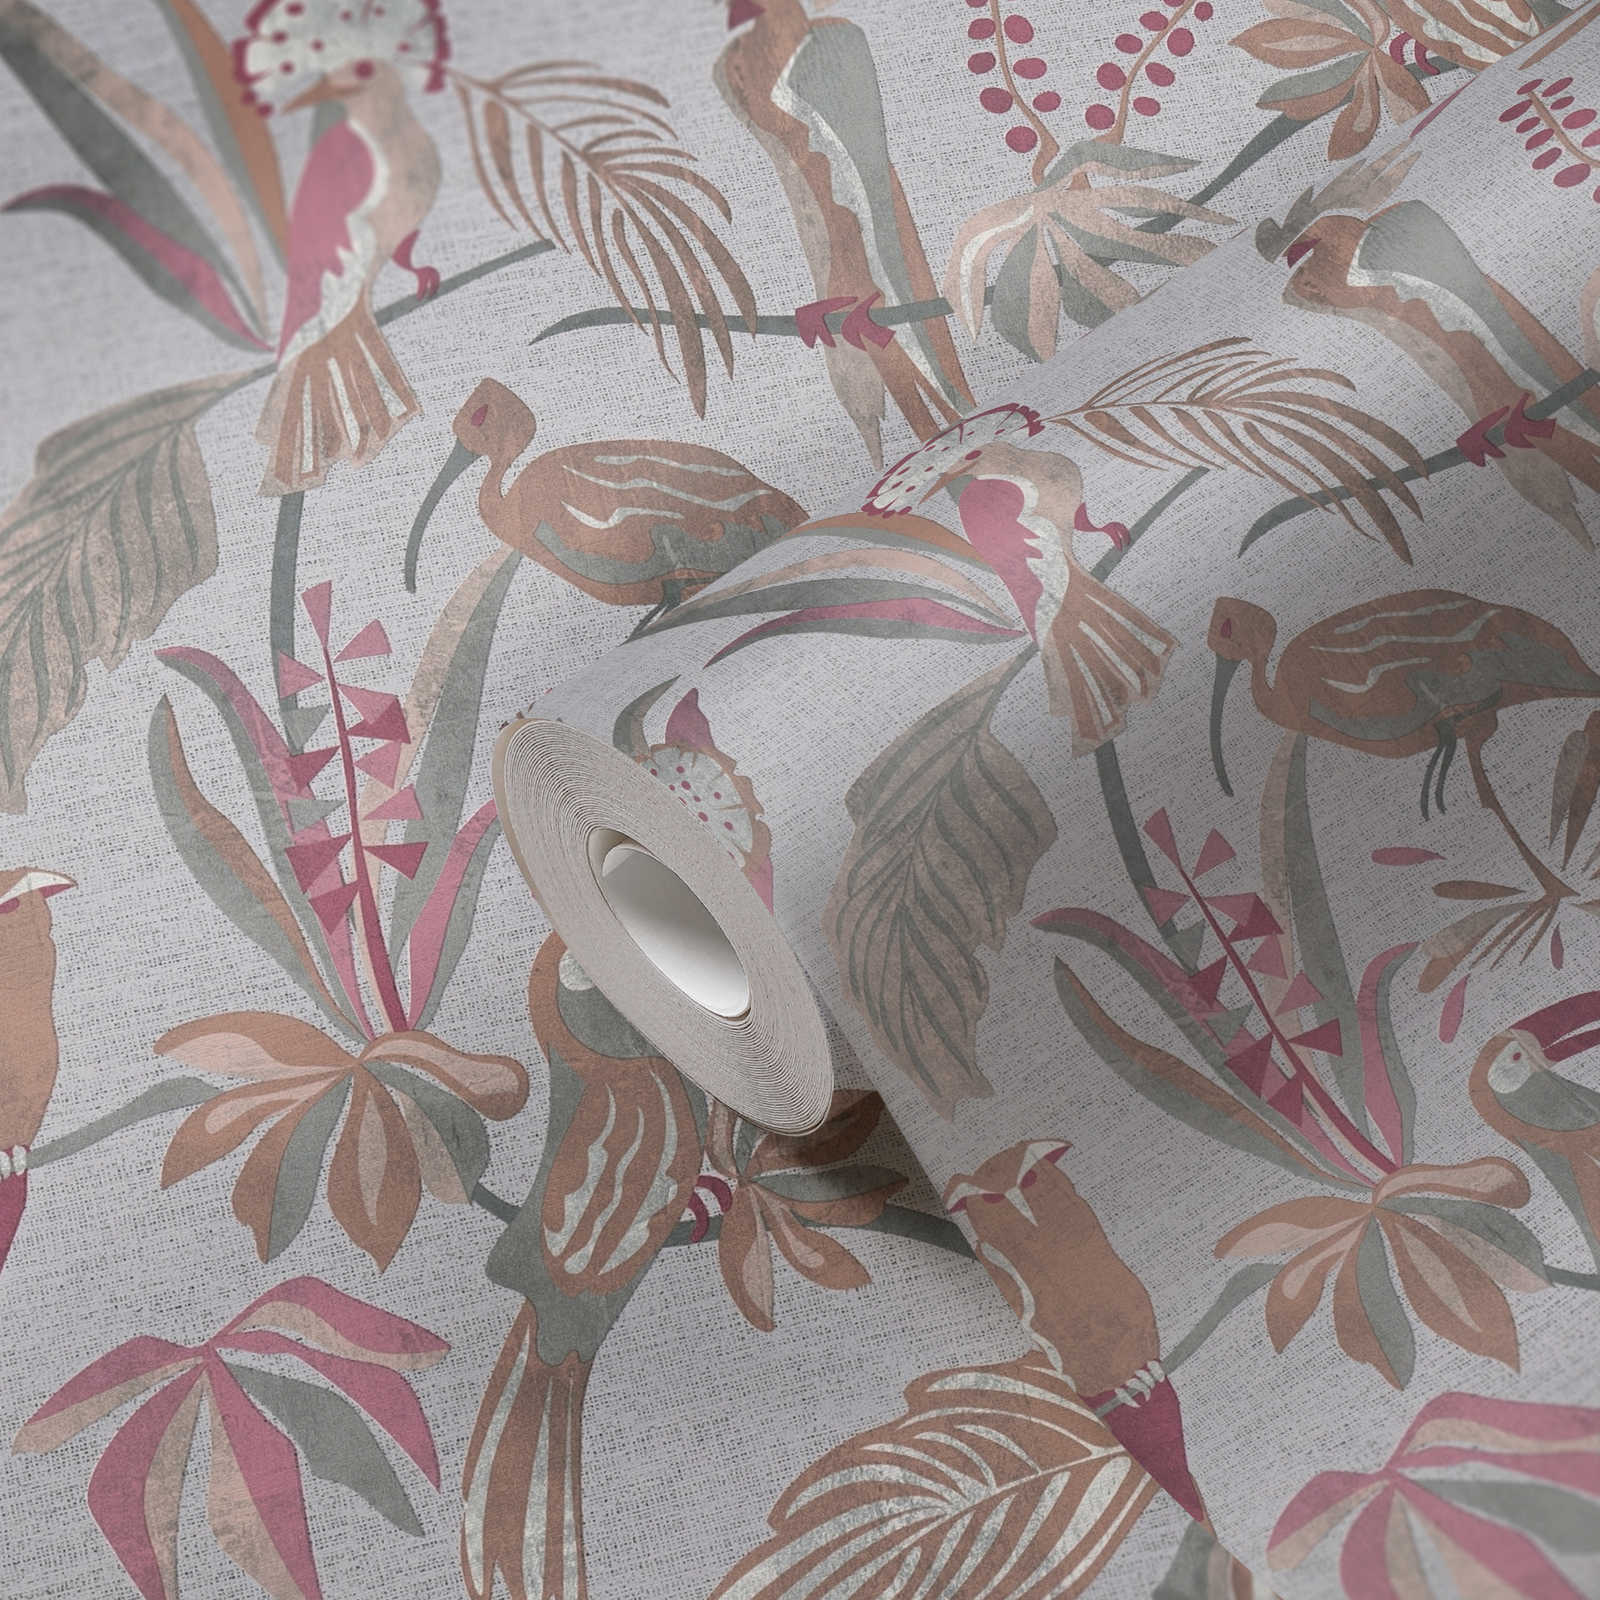             Wallpaper with tropical plants & birds in linen look - grey, brown, red
        